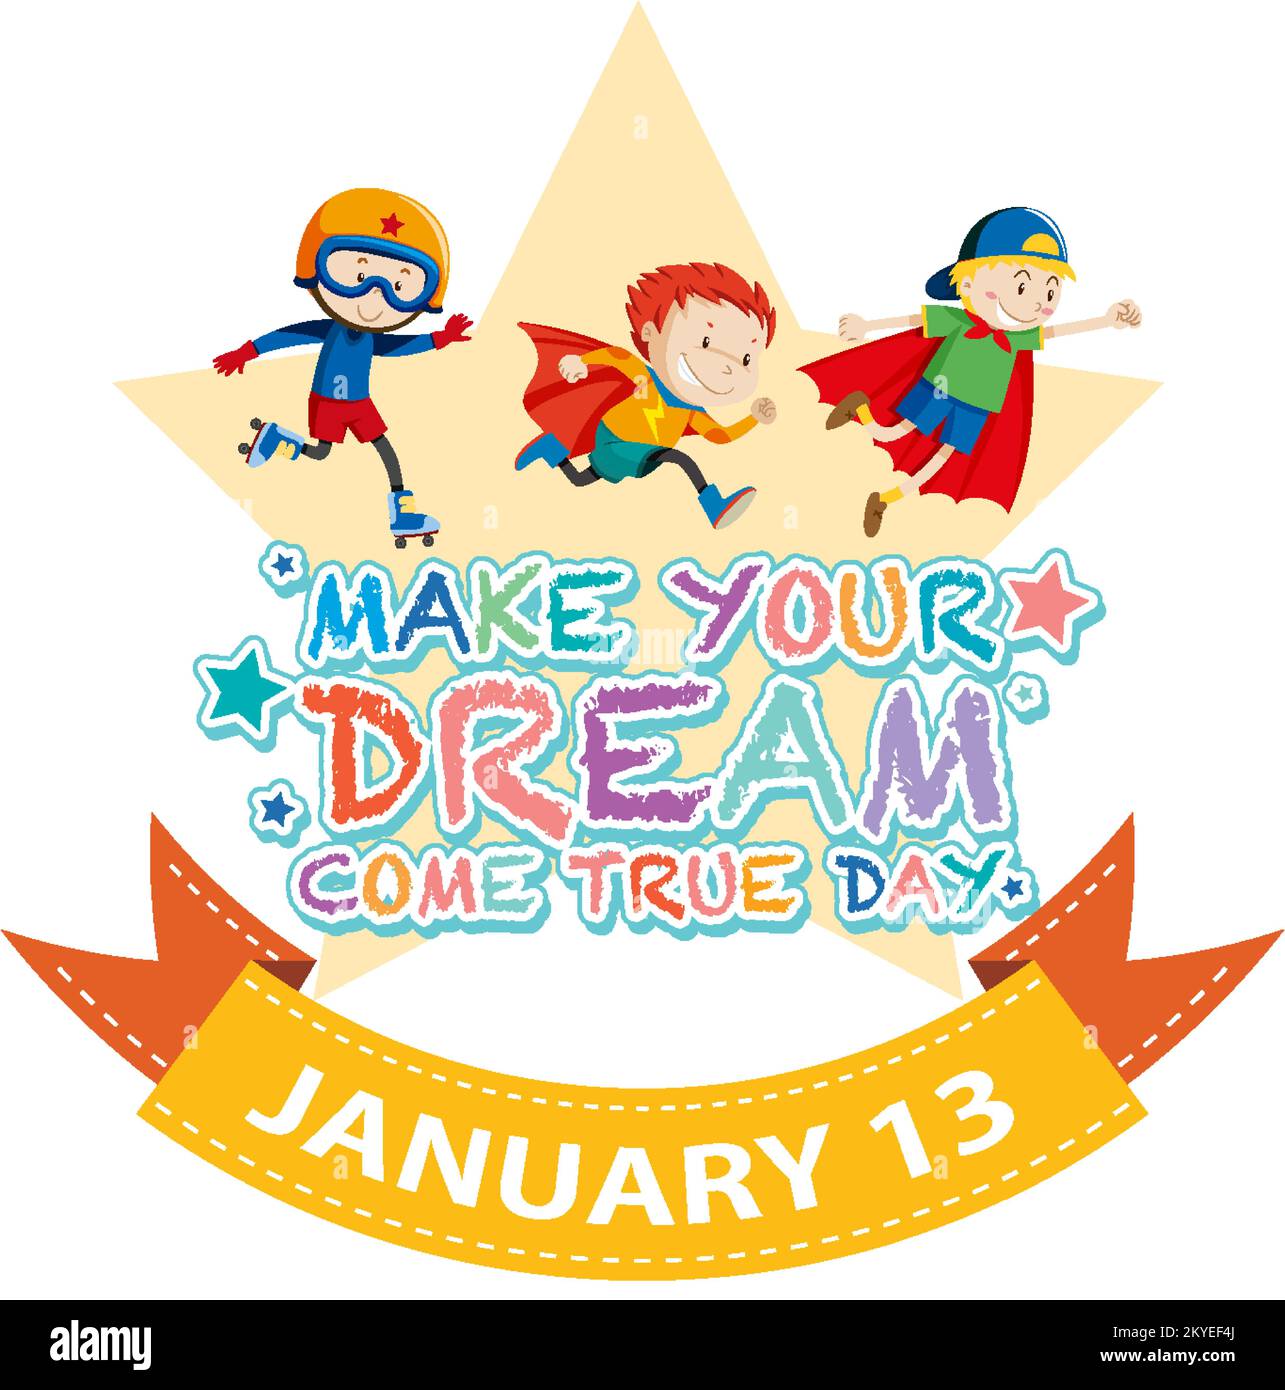 Make Your Dreams Come True Banner Design illustration Stock Vector